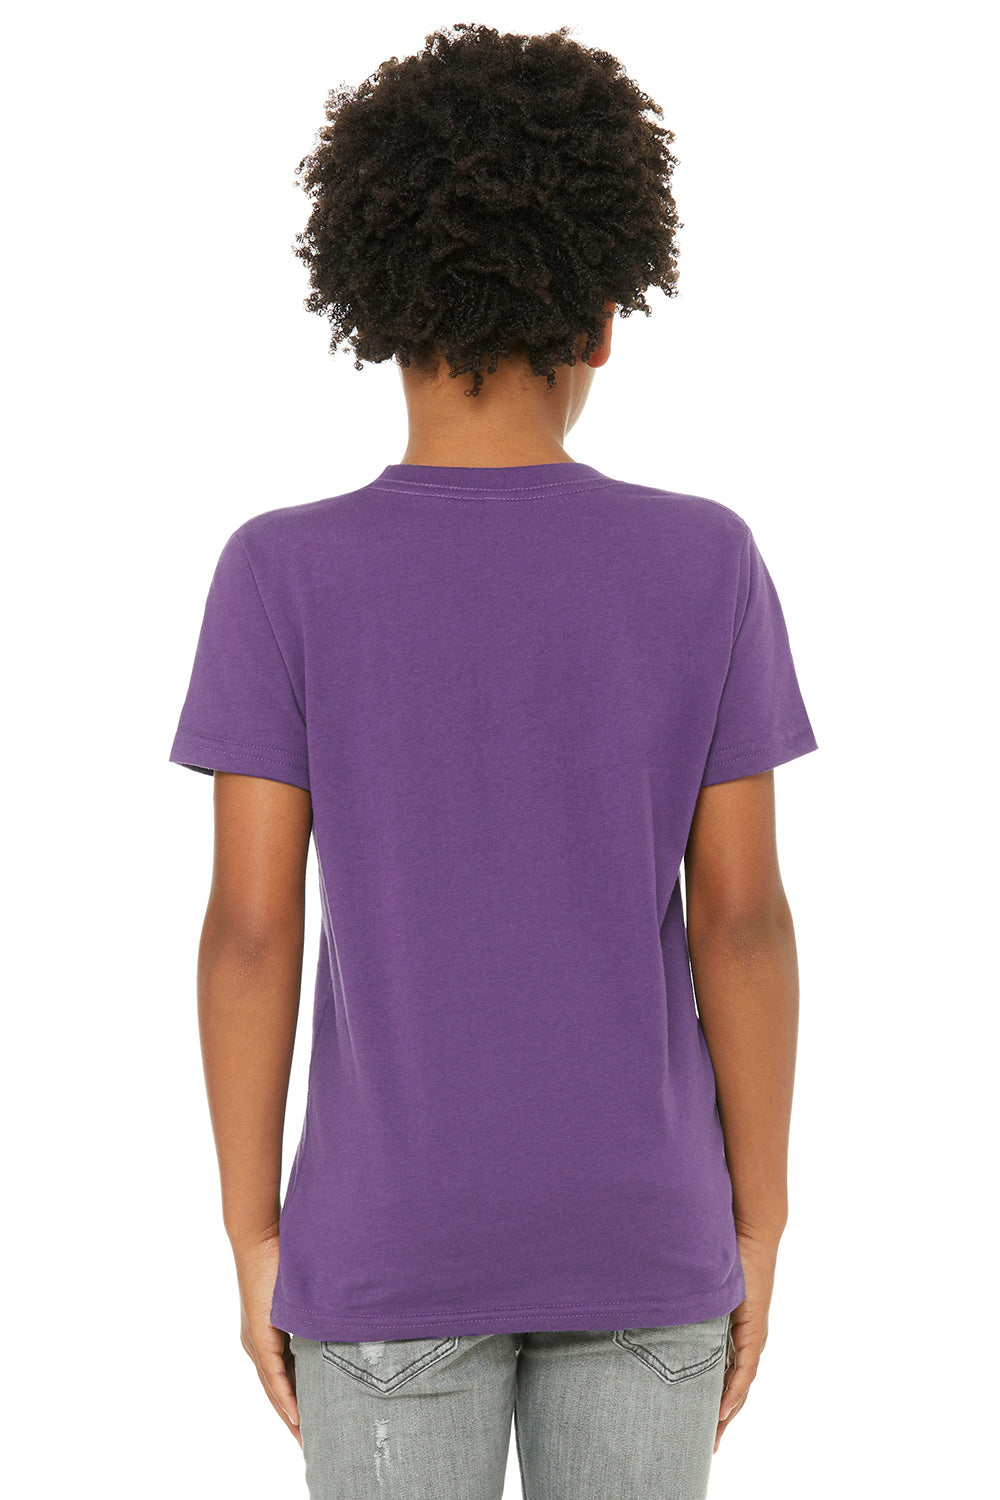 Bella + Canvas 3001Y Youth Jersey Short Sleeve Crewneck T-Shirt Royal Purple Model Back